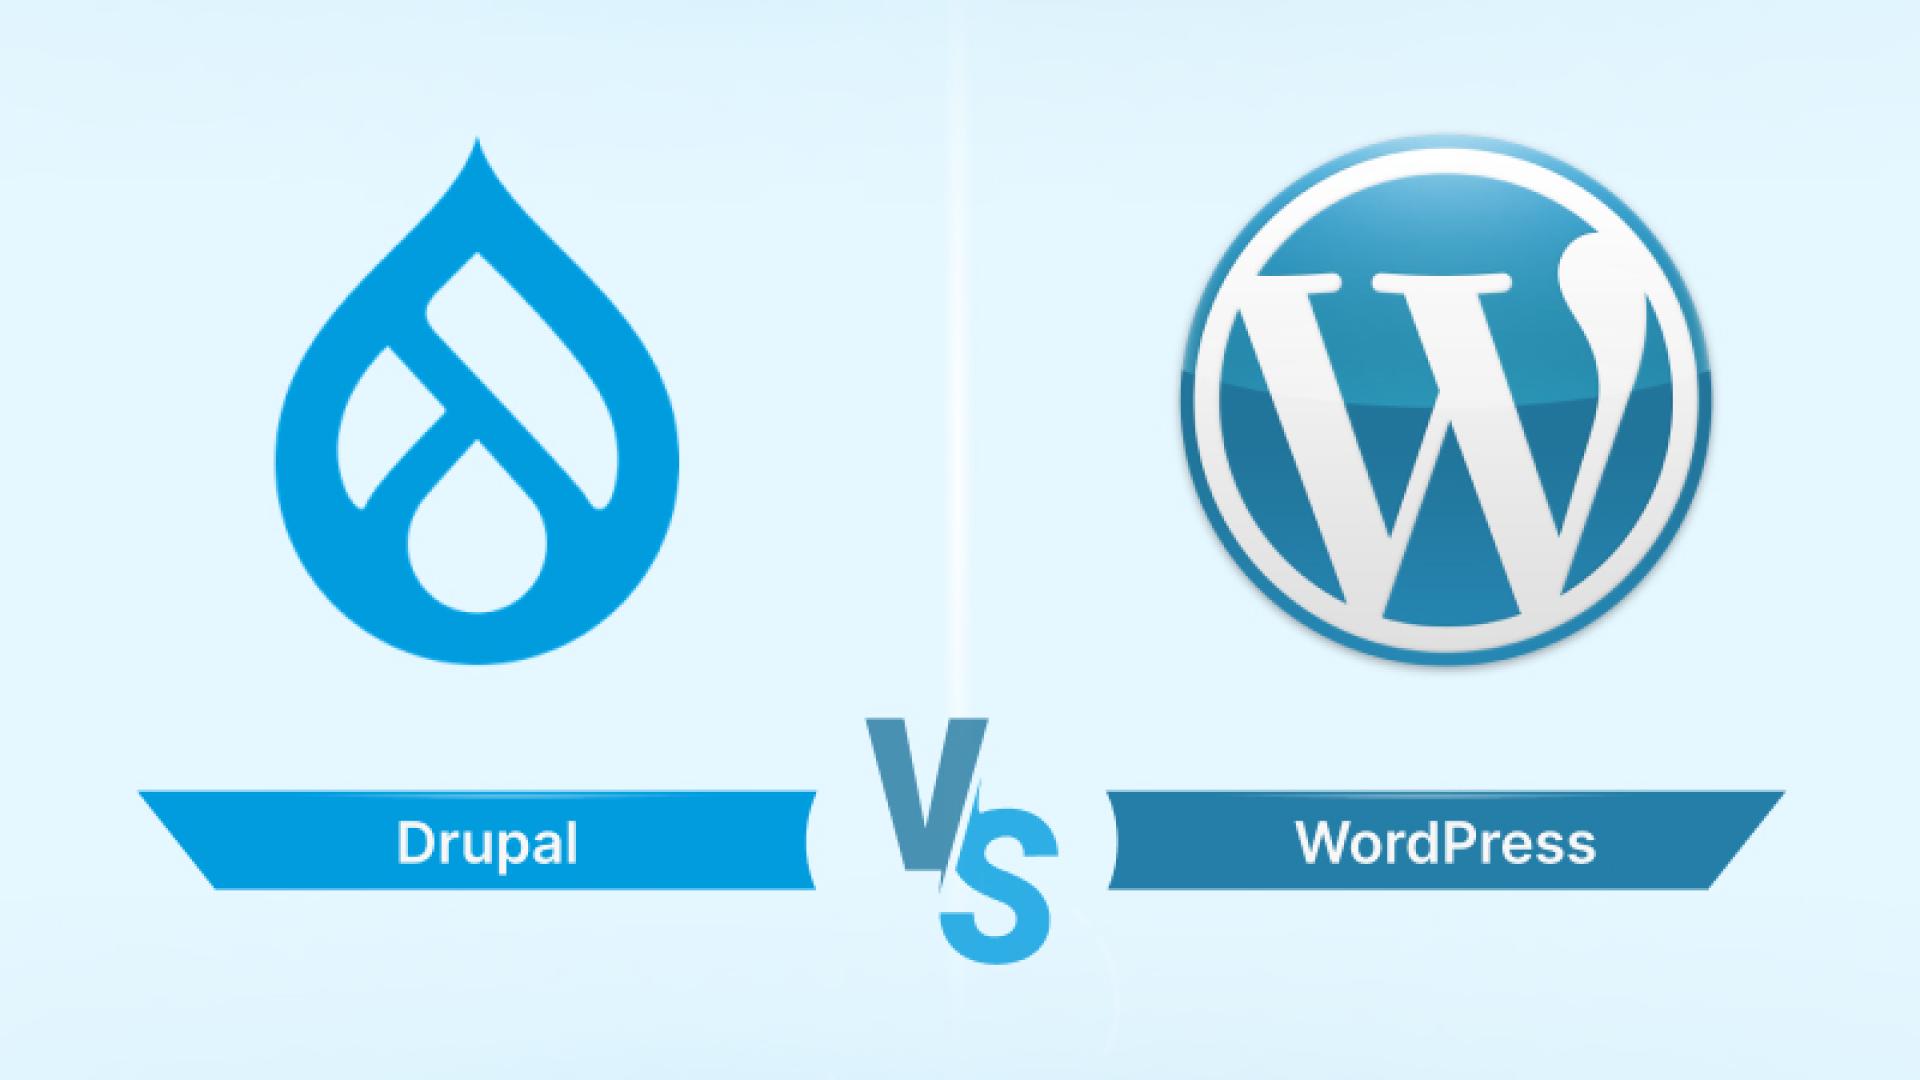 Logos of Drupal and WordPress